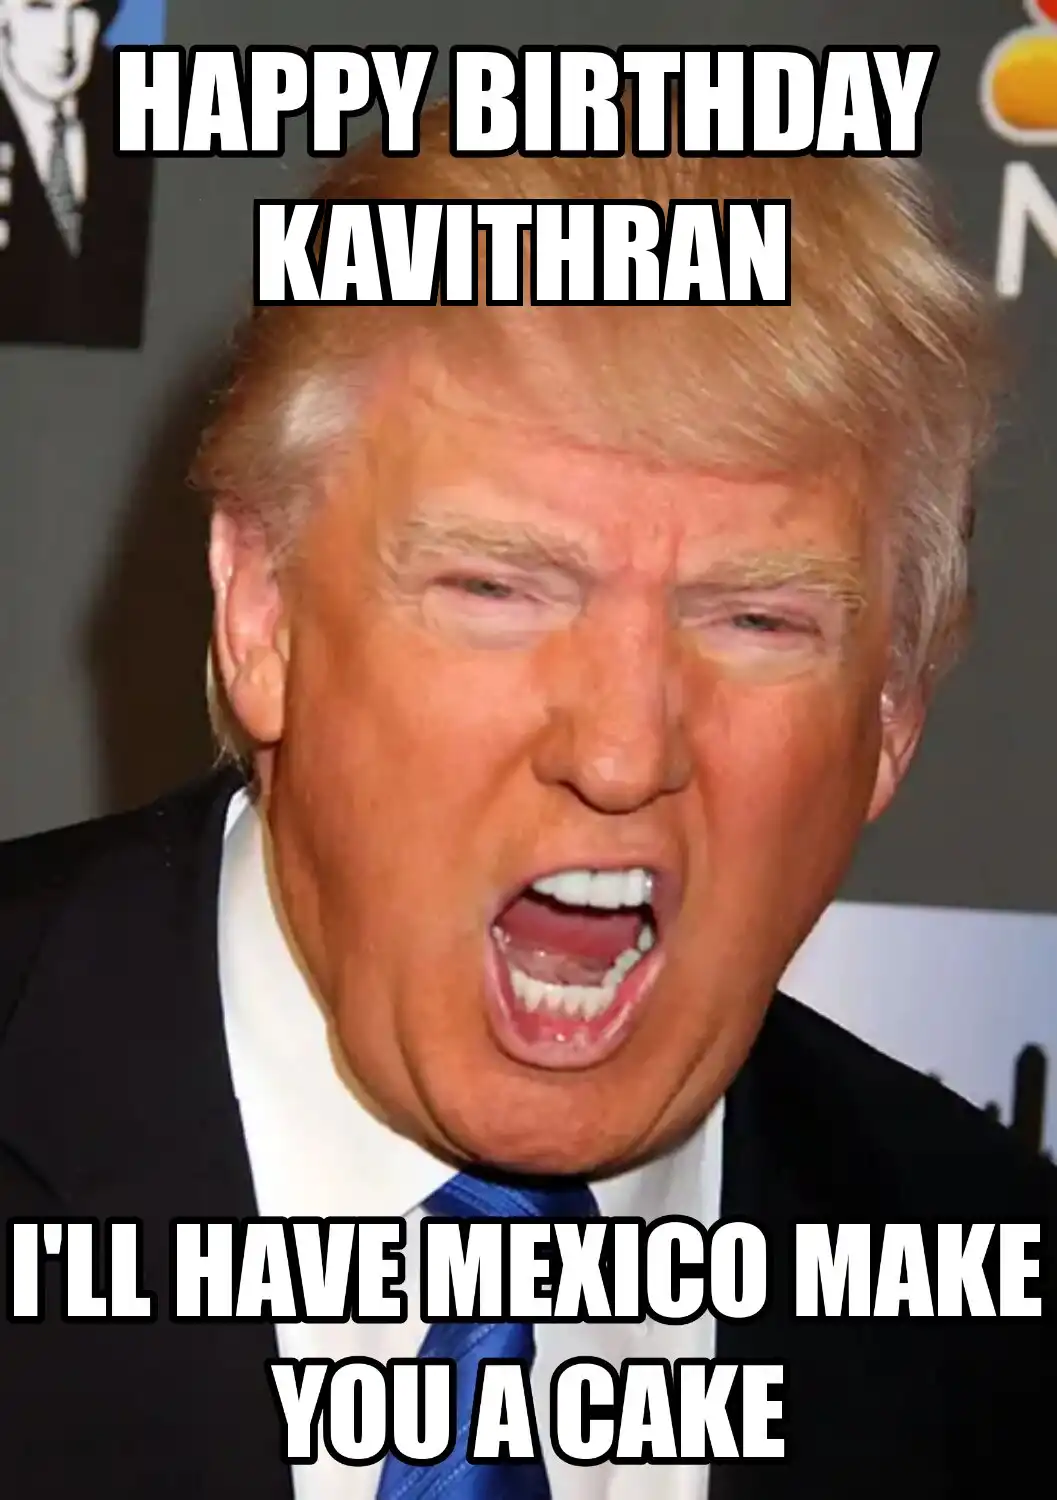 Happy Birthday Kavithran Mexico Make You A Cake Meme